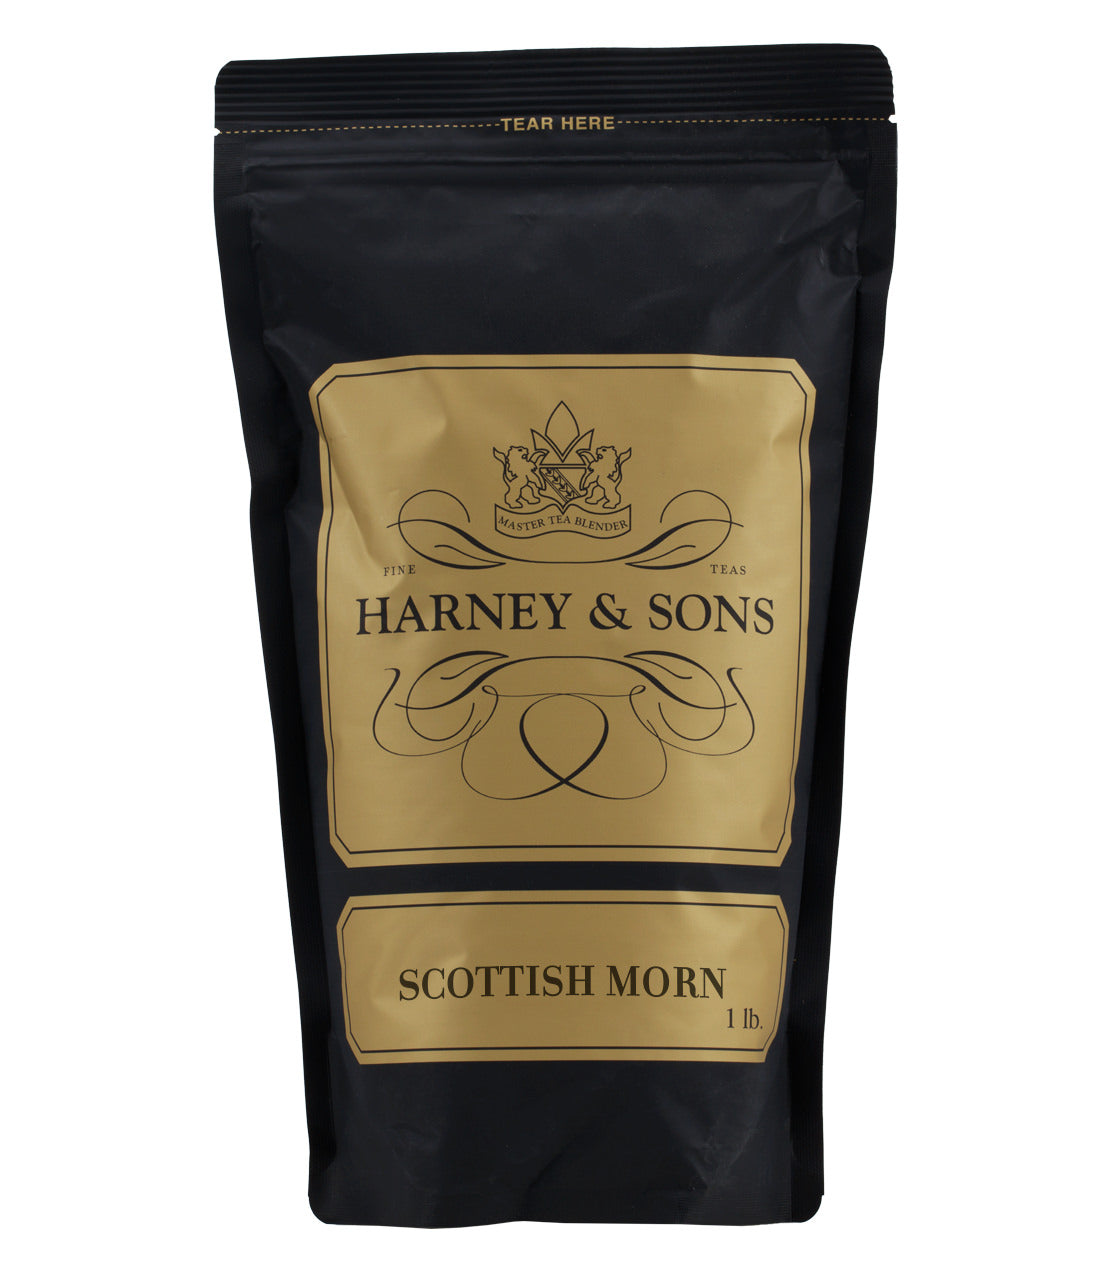 Scottish Morn - Loose 1 lb. Bag - Harney & Sons Fine Teas